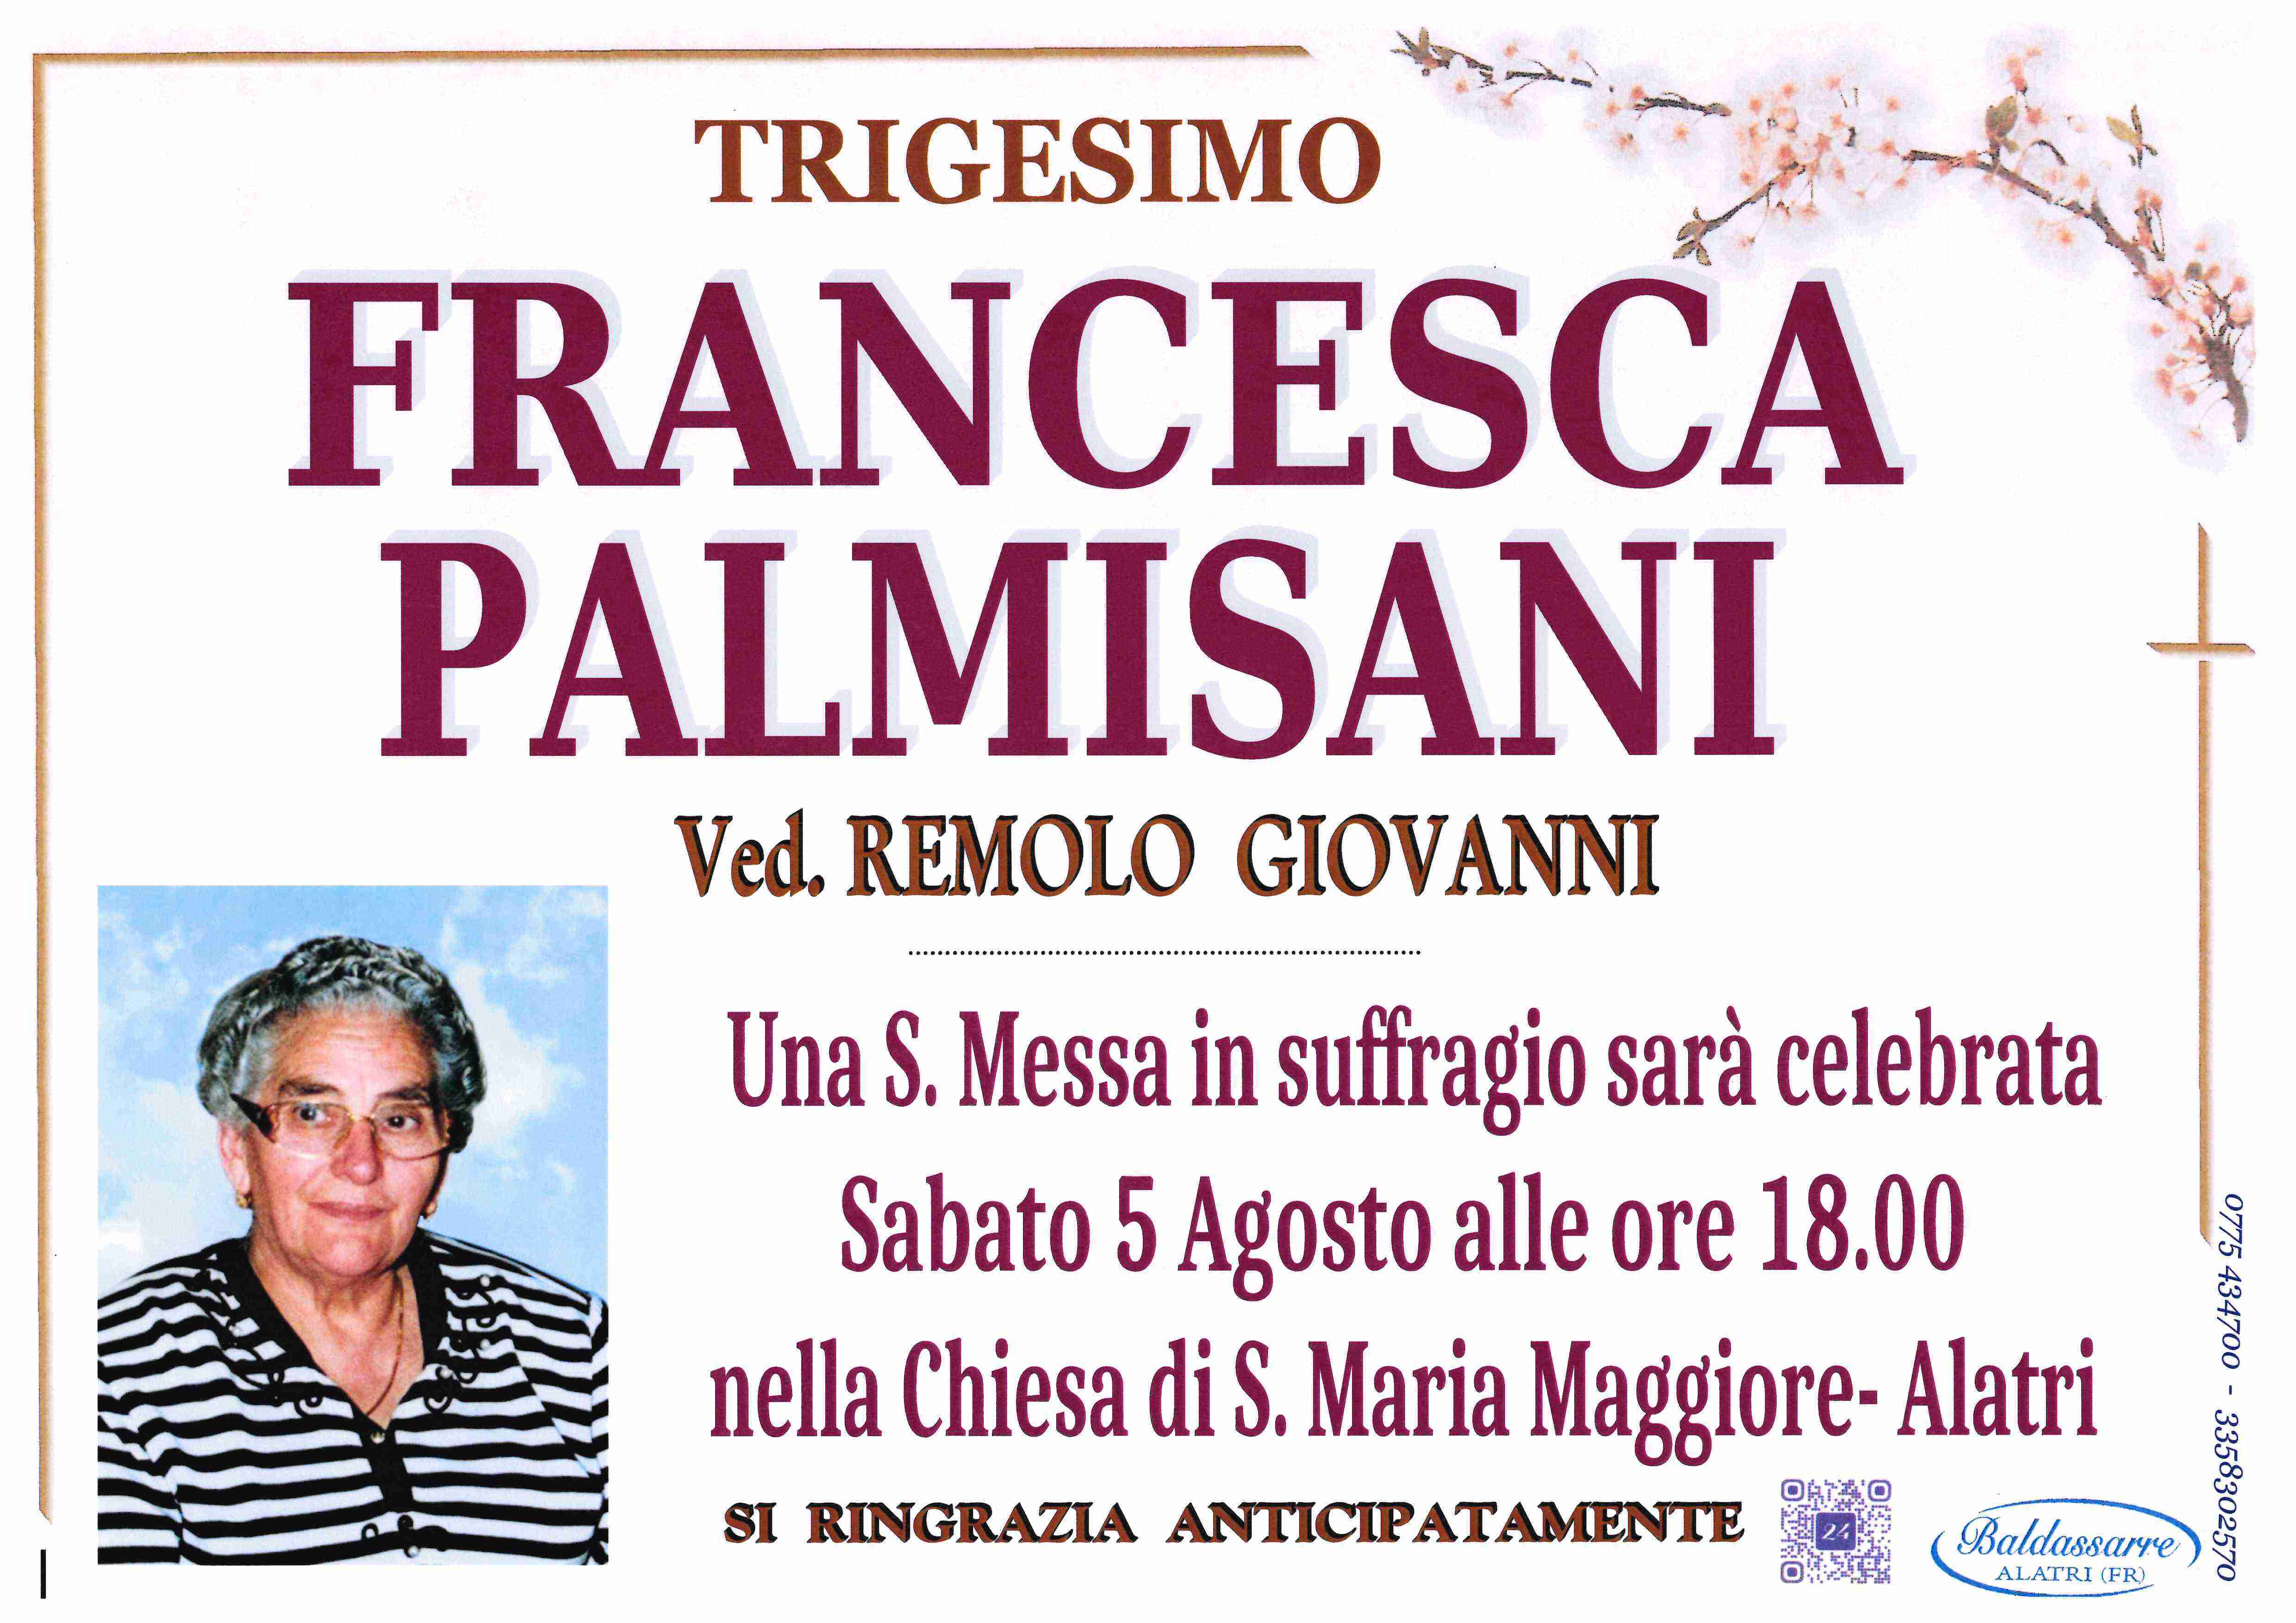 Francesca Palmisani